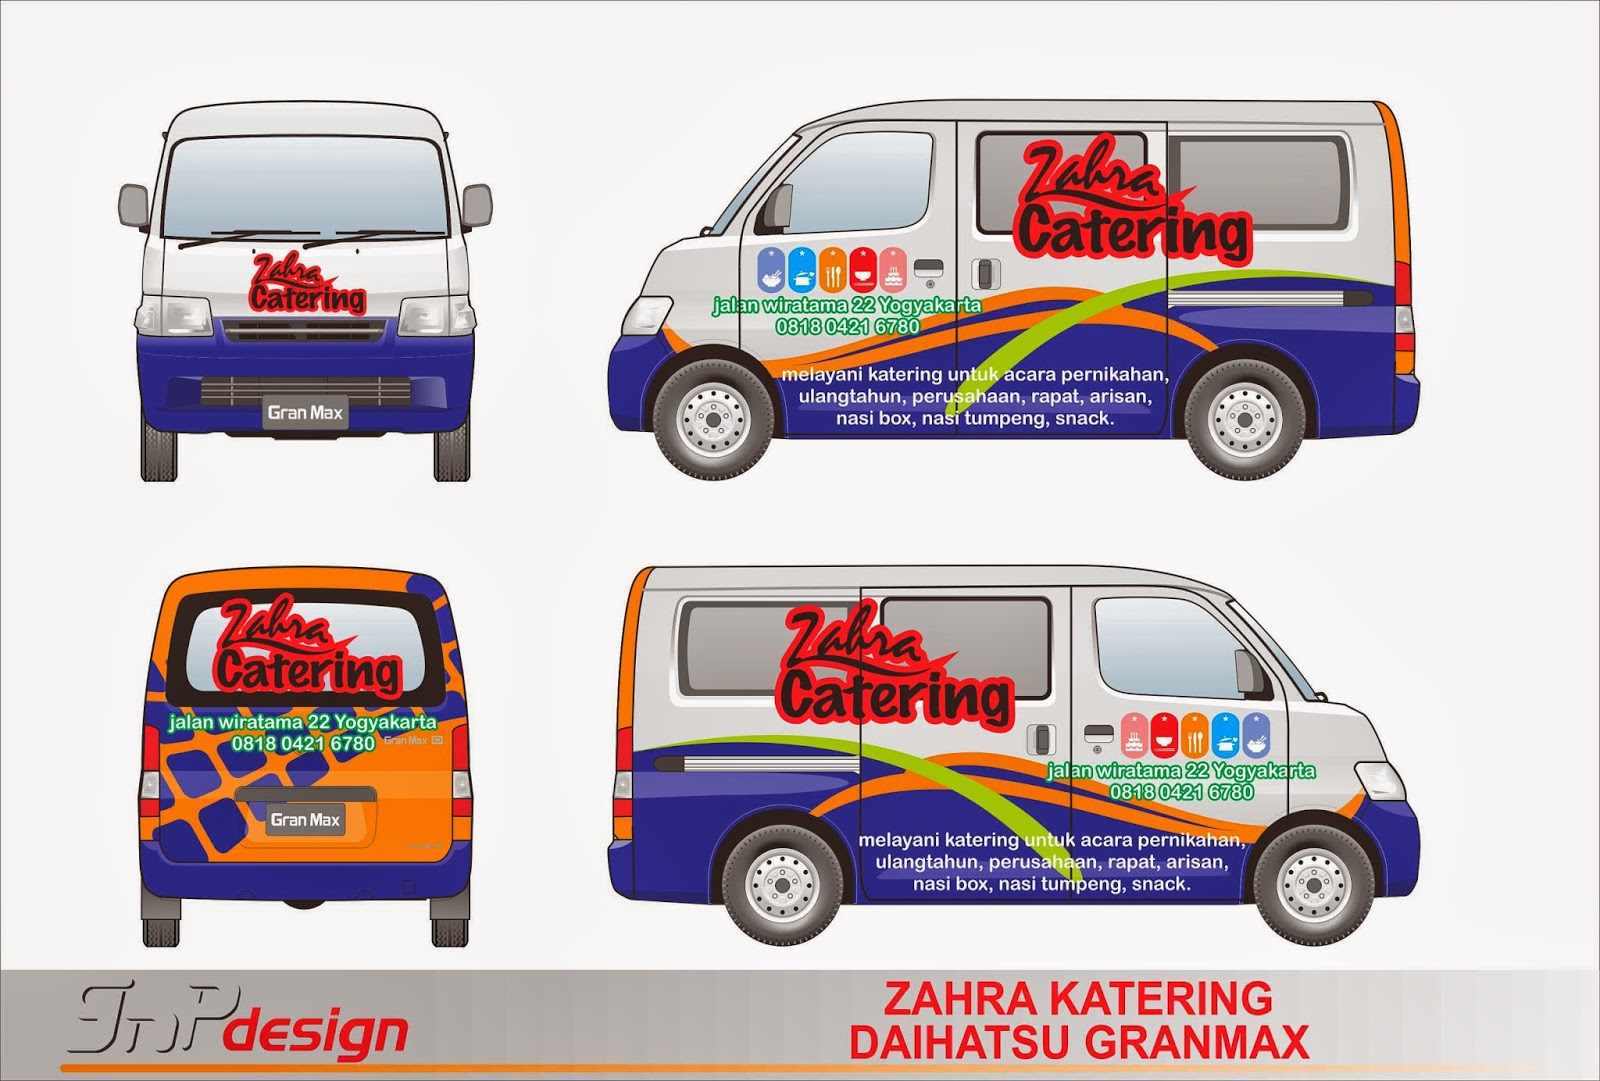 Gnp design: Body Stripe Daihatsu GranMax Zahra Catering